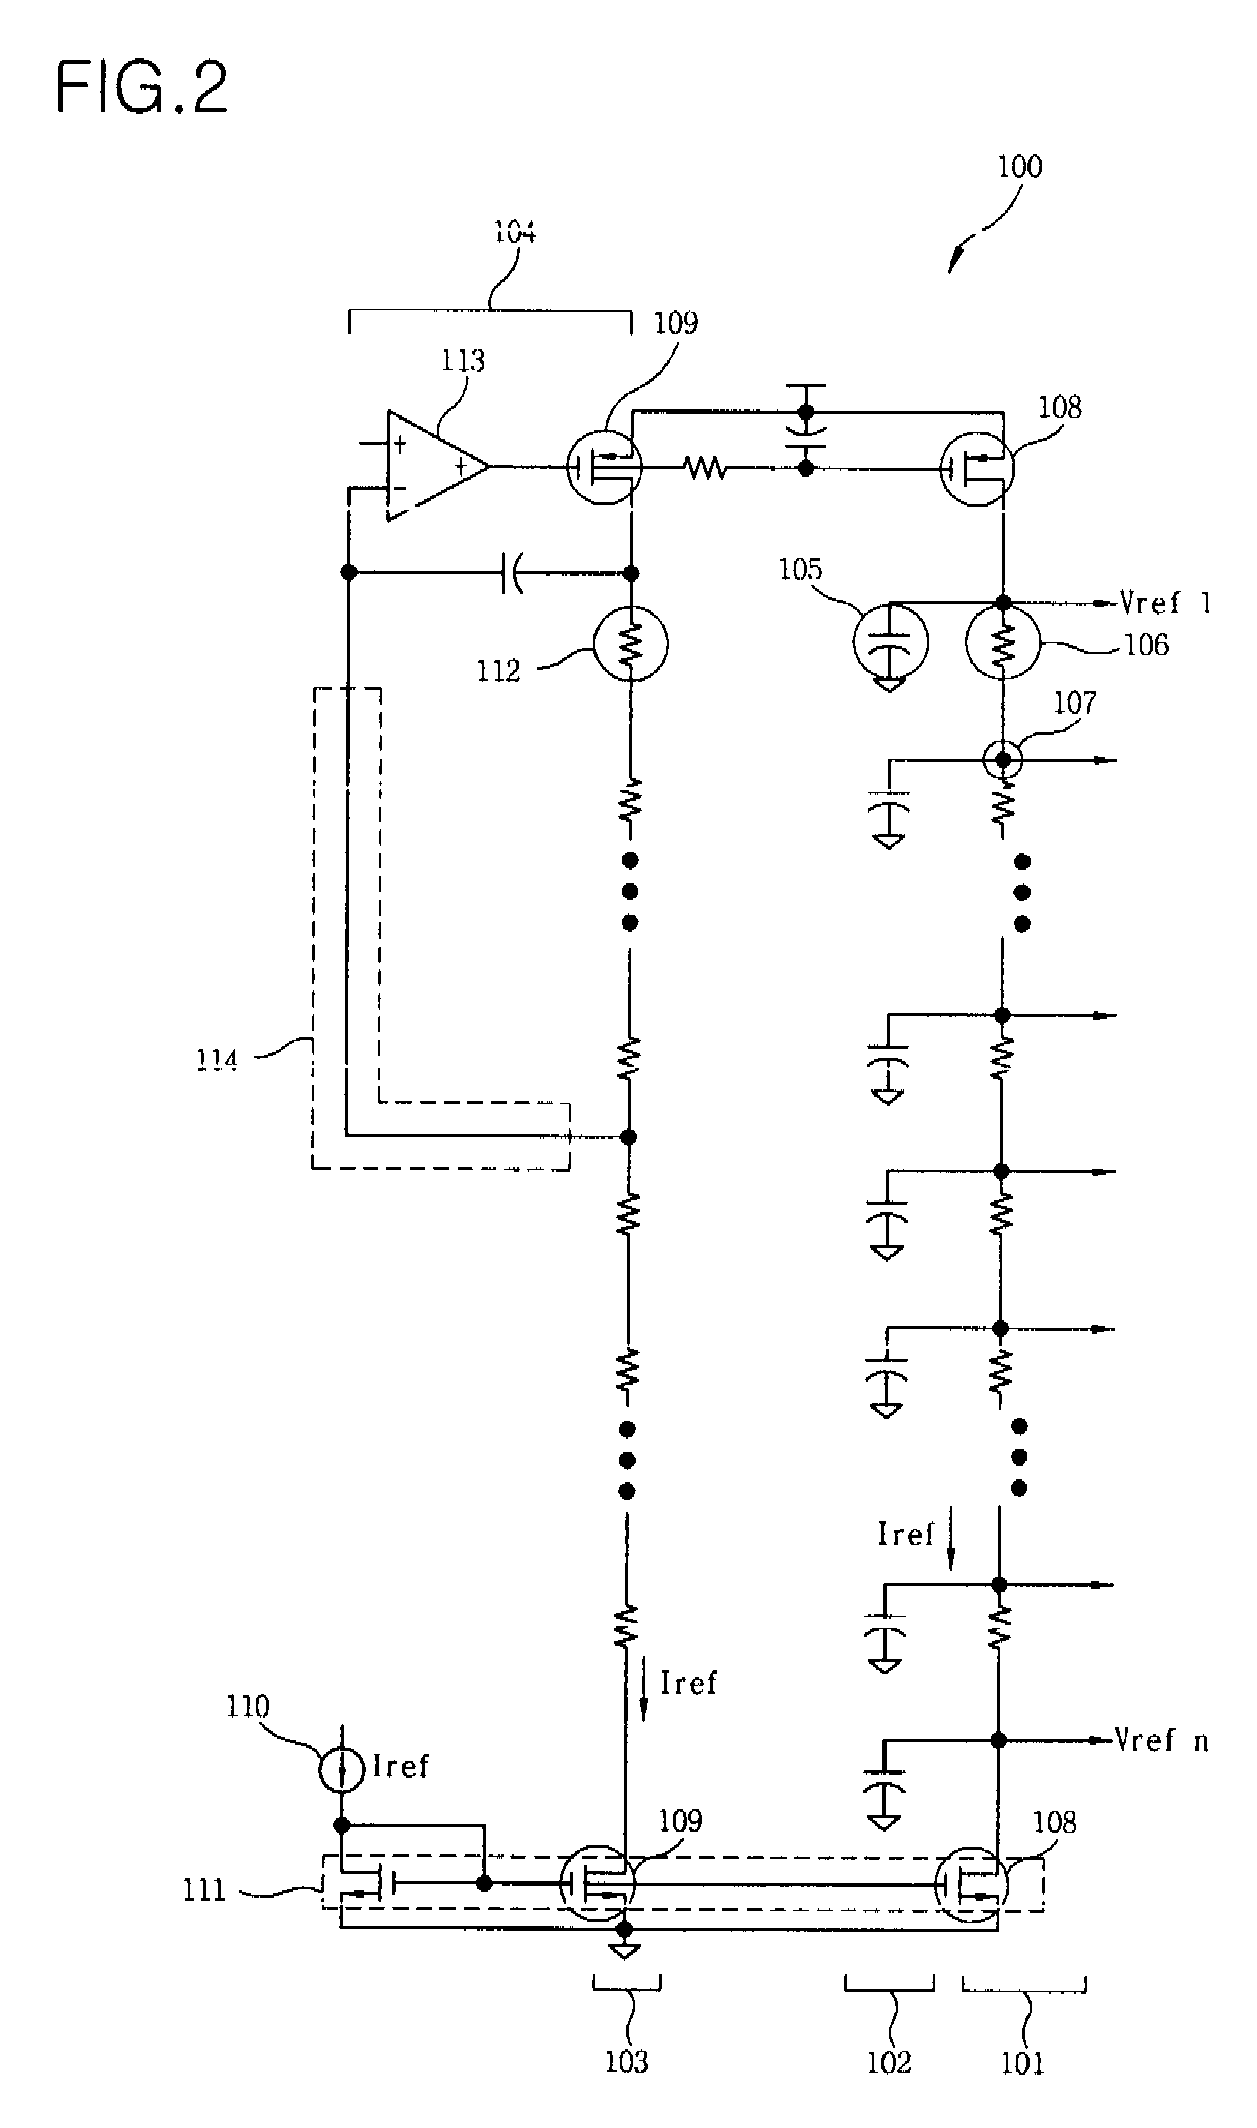 Reference voltage generator of analog-to-digital converter